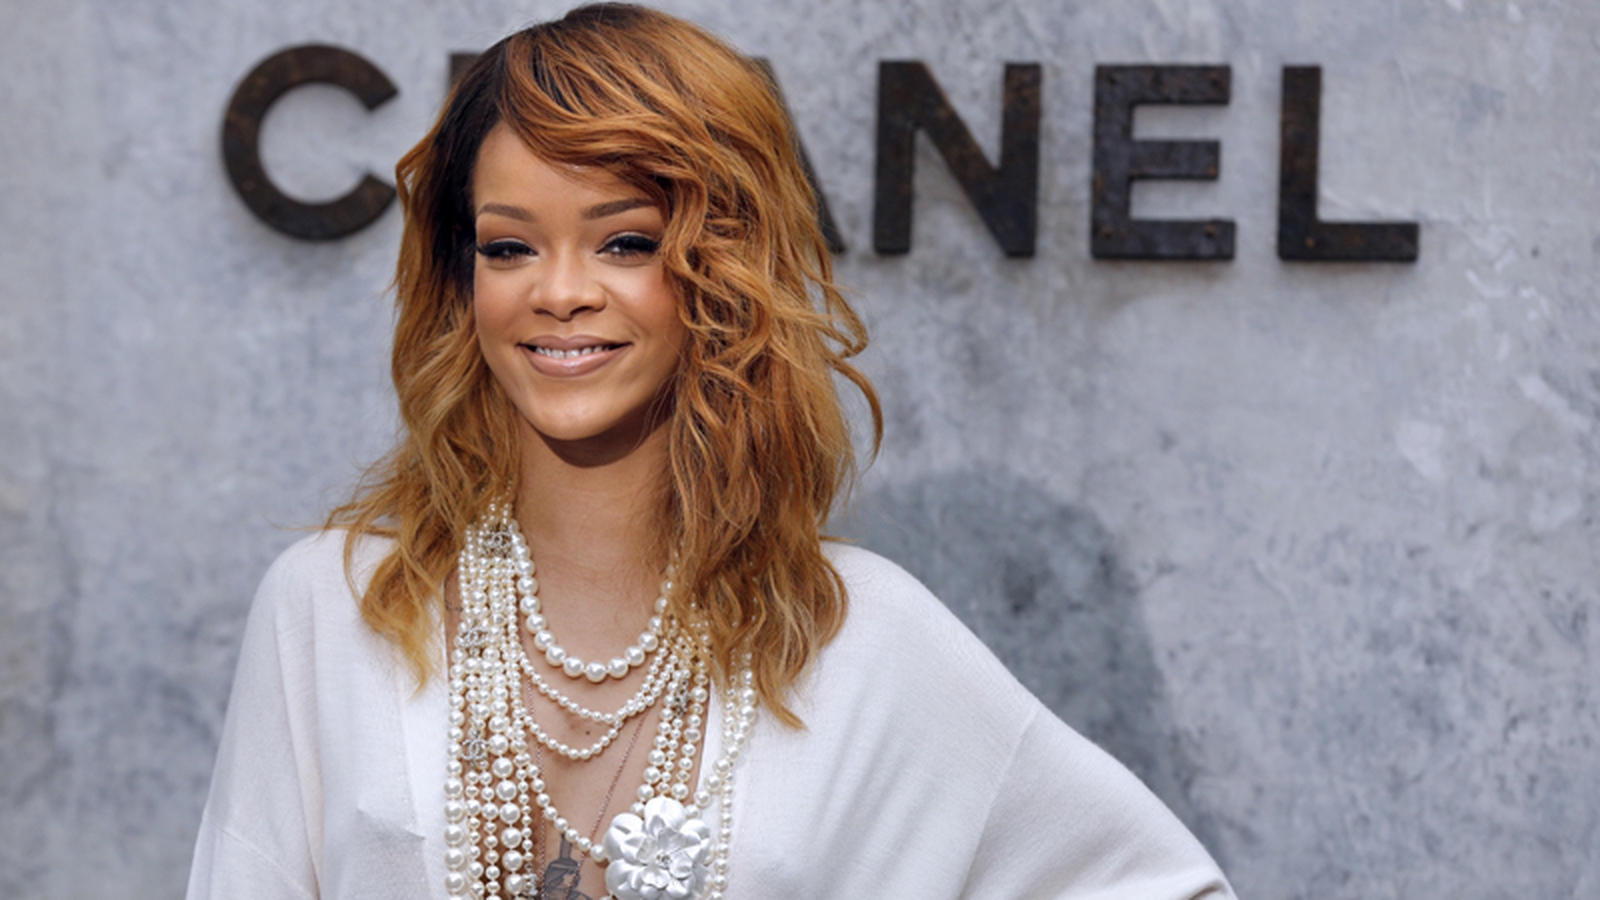 Rihanna wears revealing cardie to Chanel